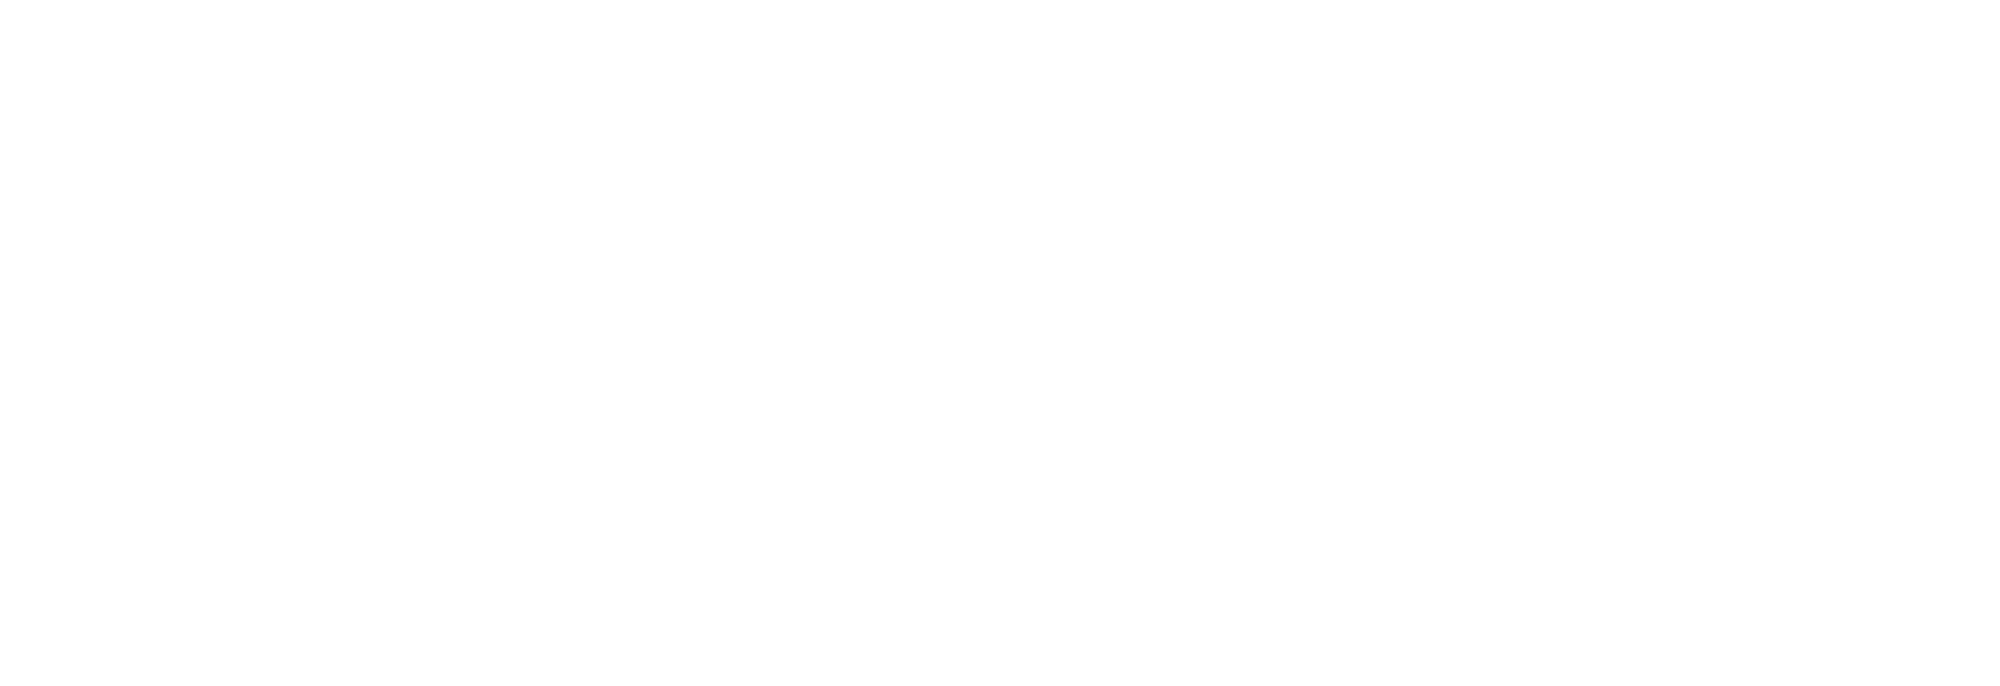 North Branch Ventures